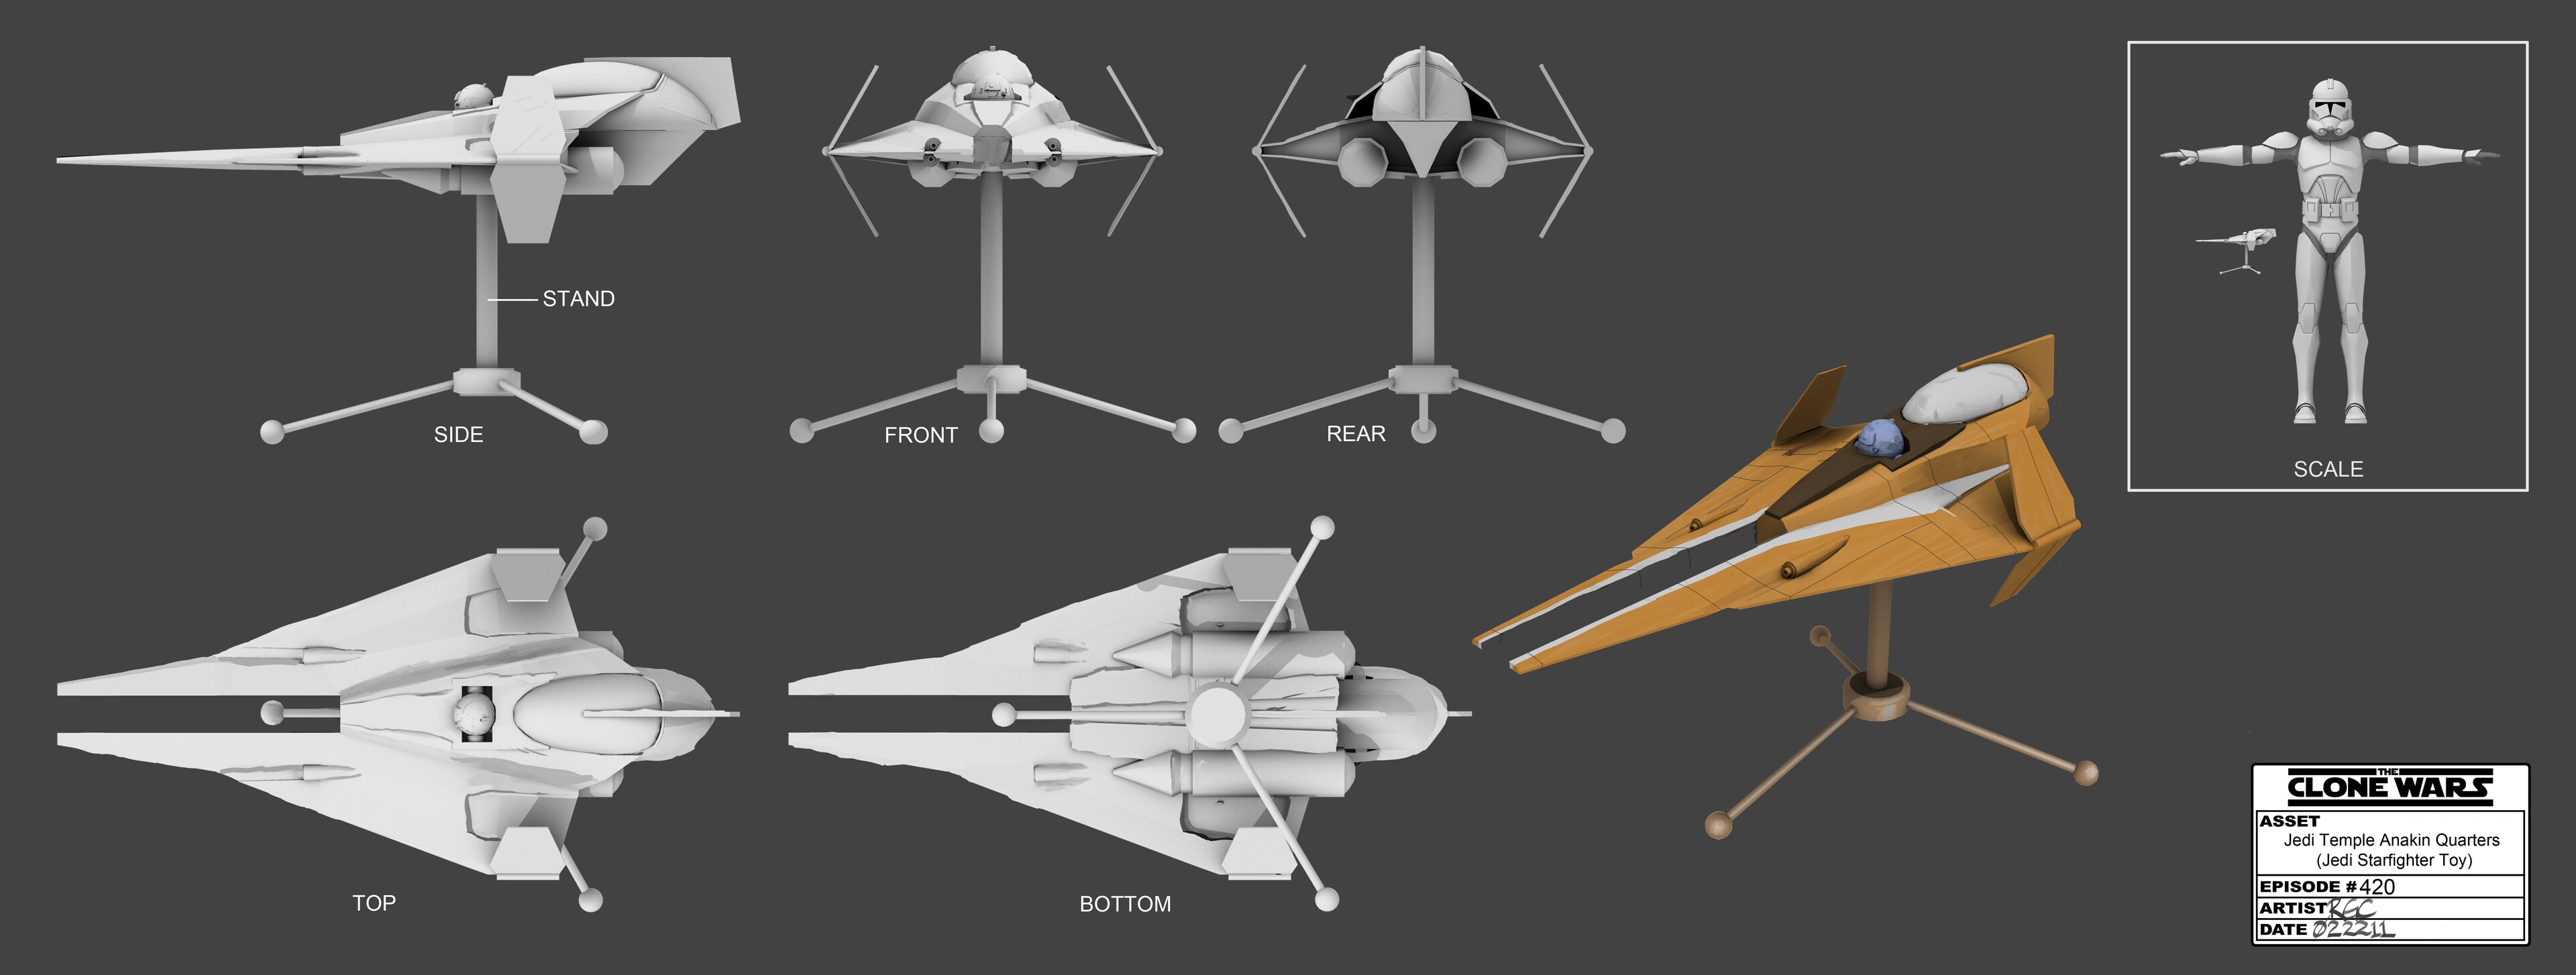 Anakin's Jedi starfighter toy illustration (dated February 22, 2011).